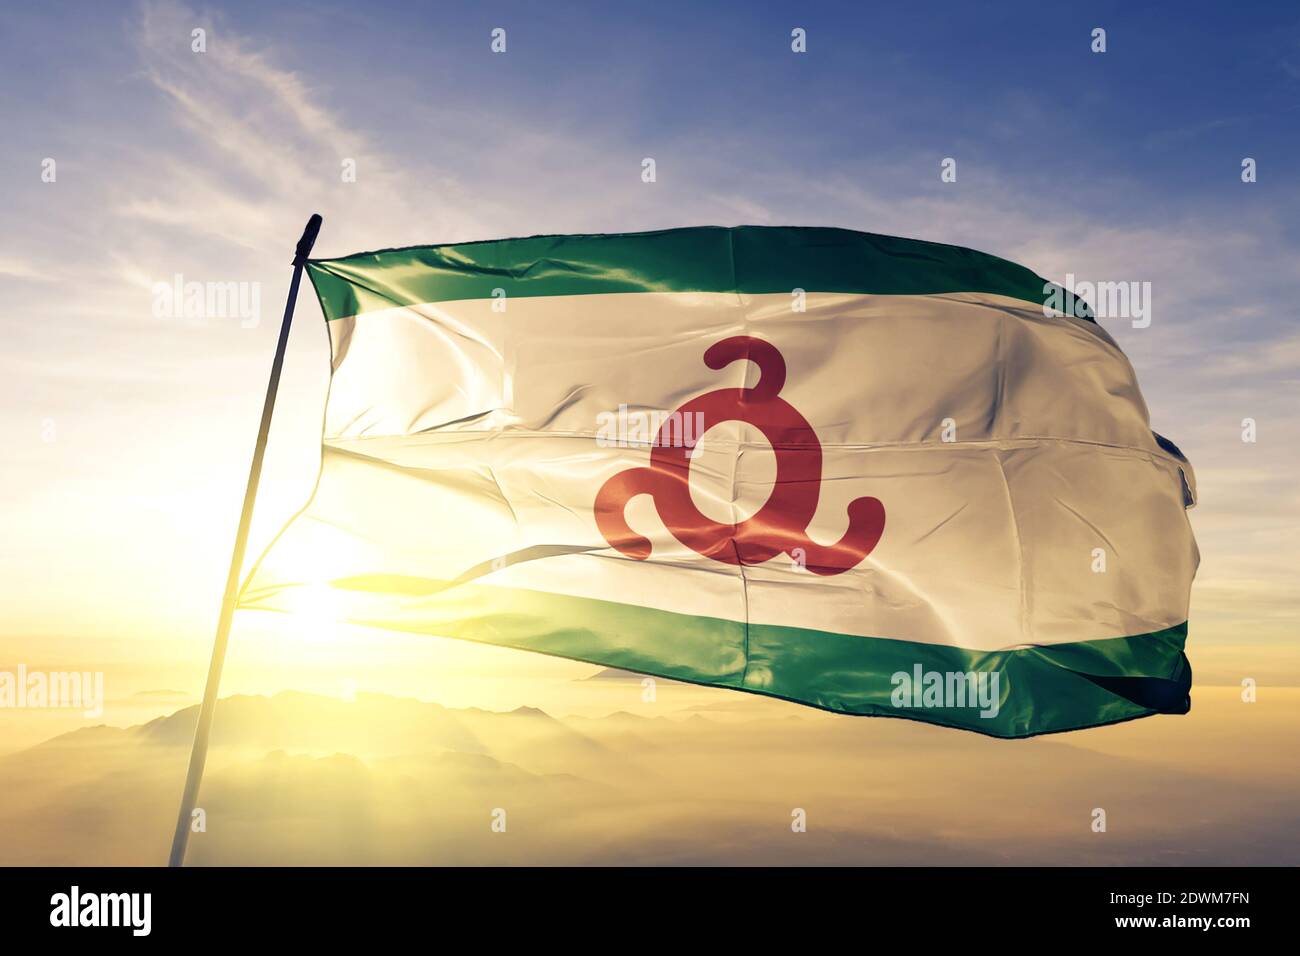 ингушский флаг картинки